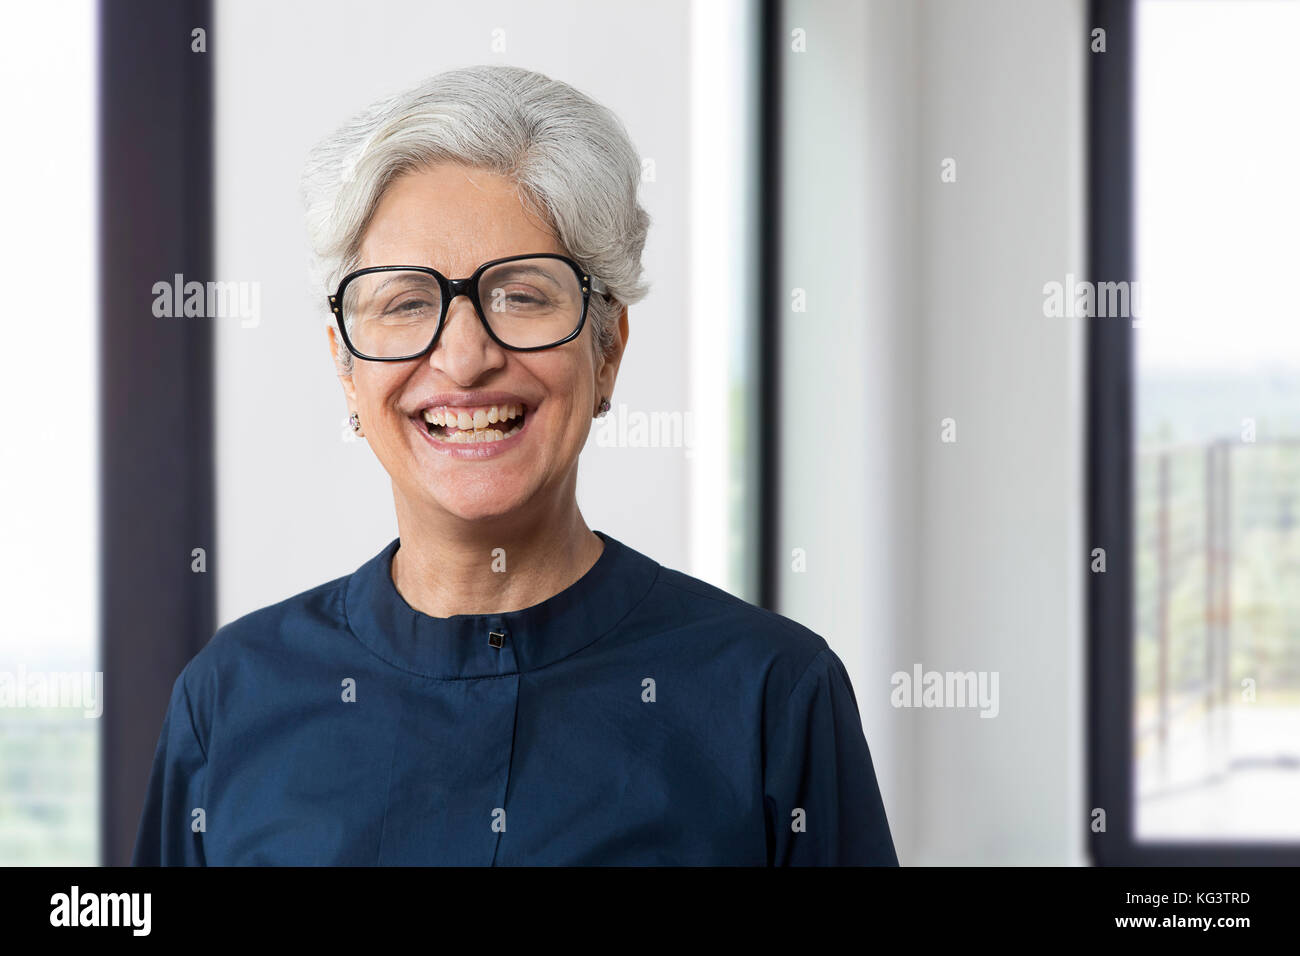 Portrait of smiling senior woman wearing Eye glasses Banque D'Images